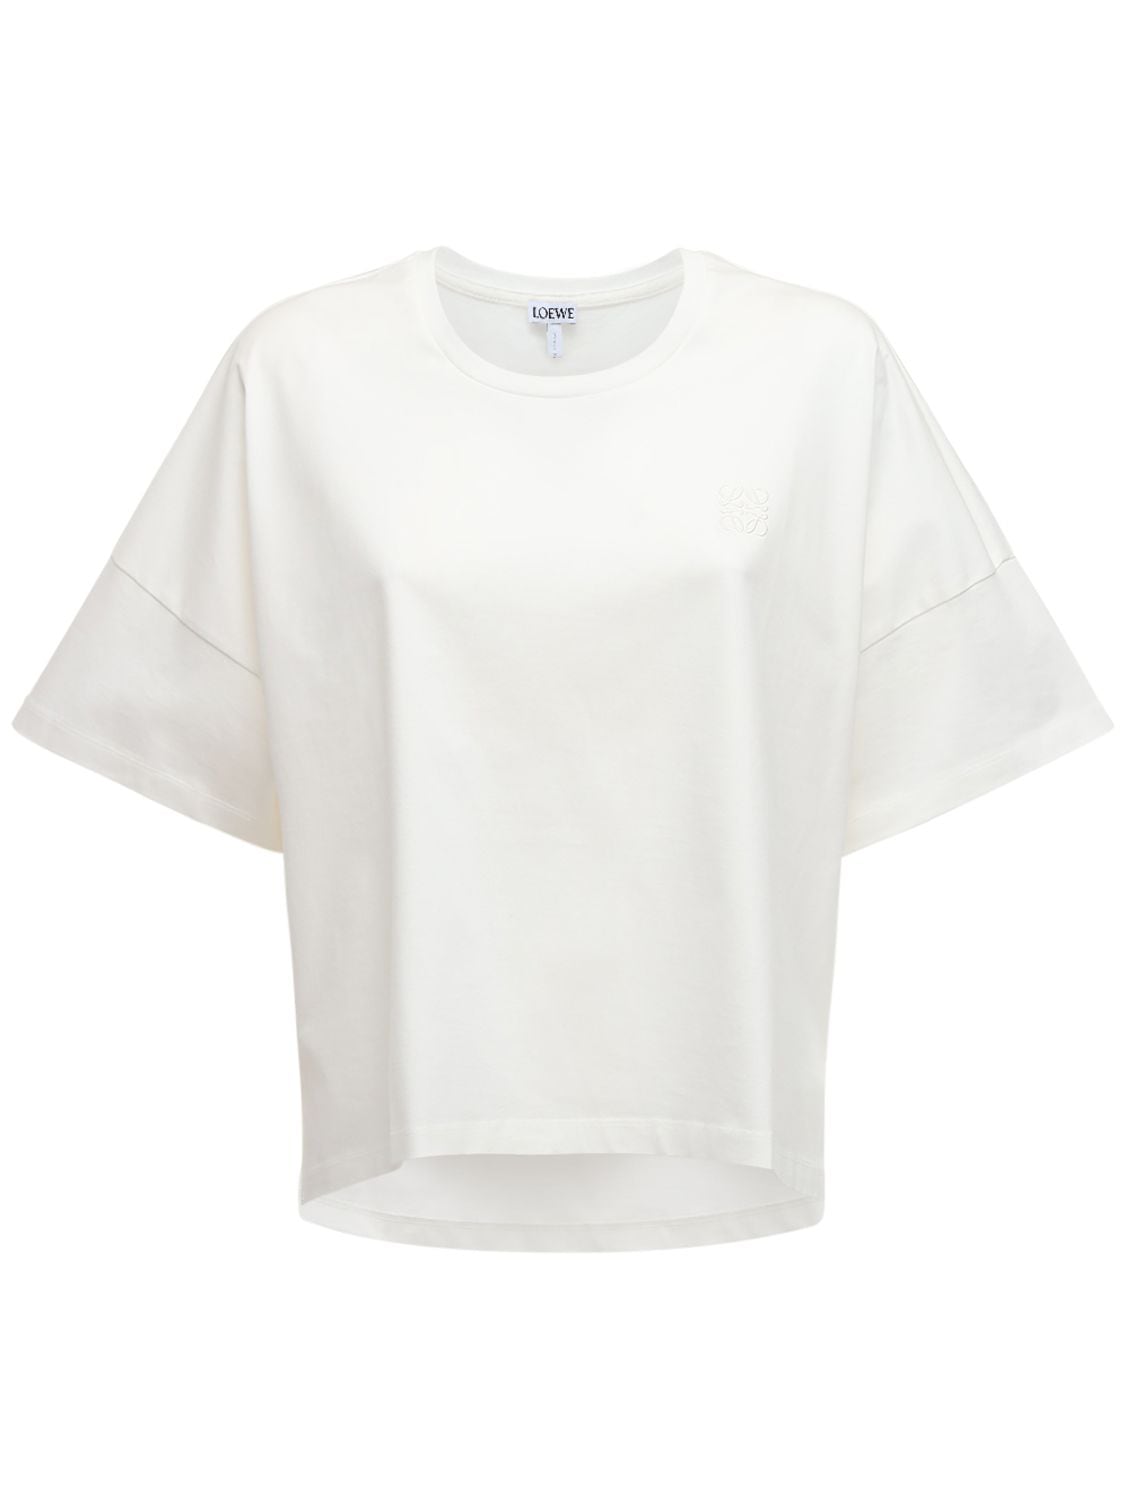 LOEWE - Logo cropped cotton jersey t-shirt - White | Luisaviaroma